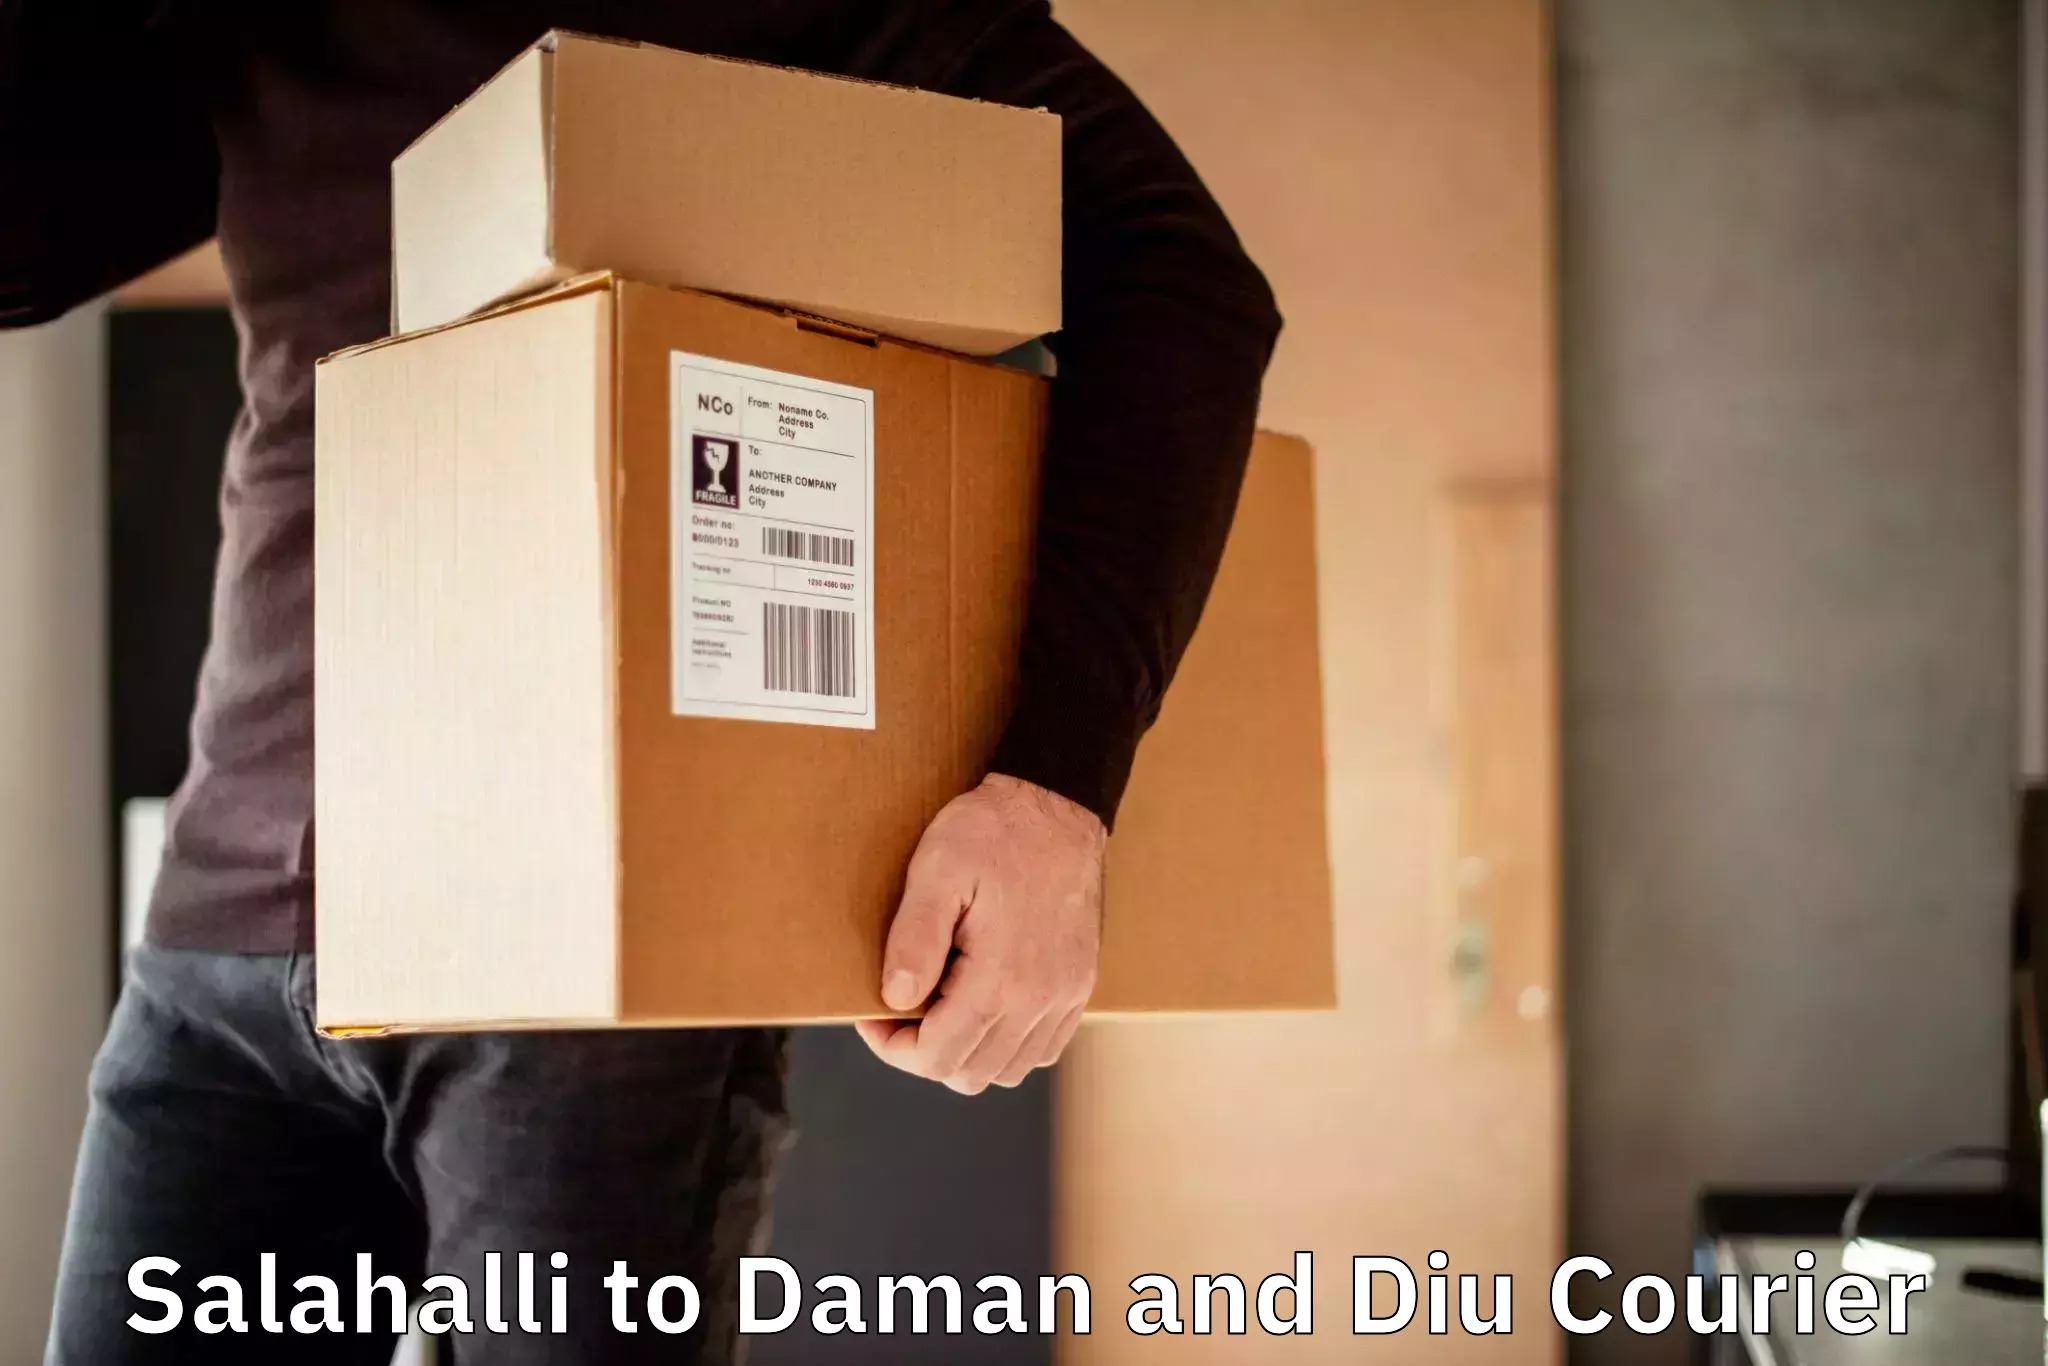 Courier service innovation Salahalli to Daman